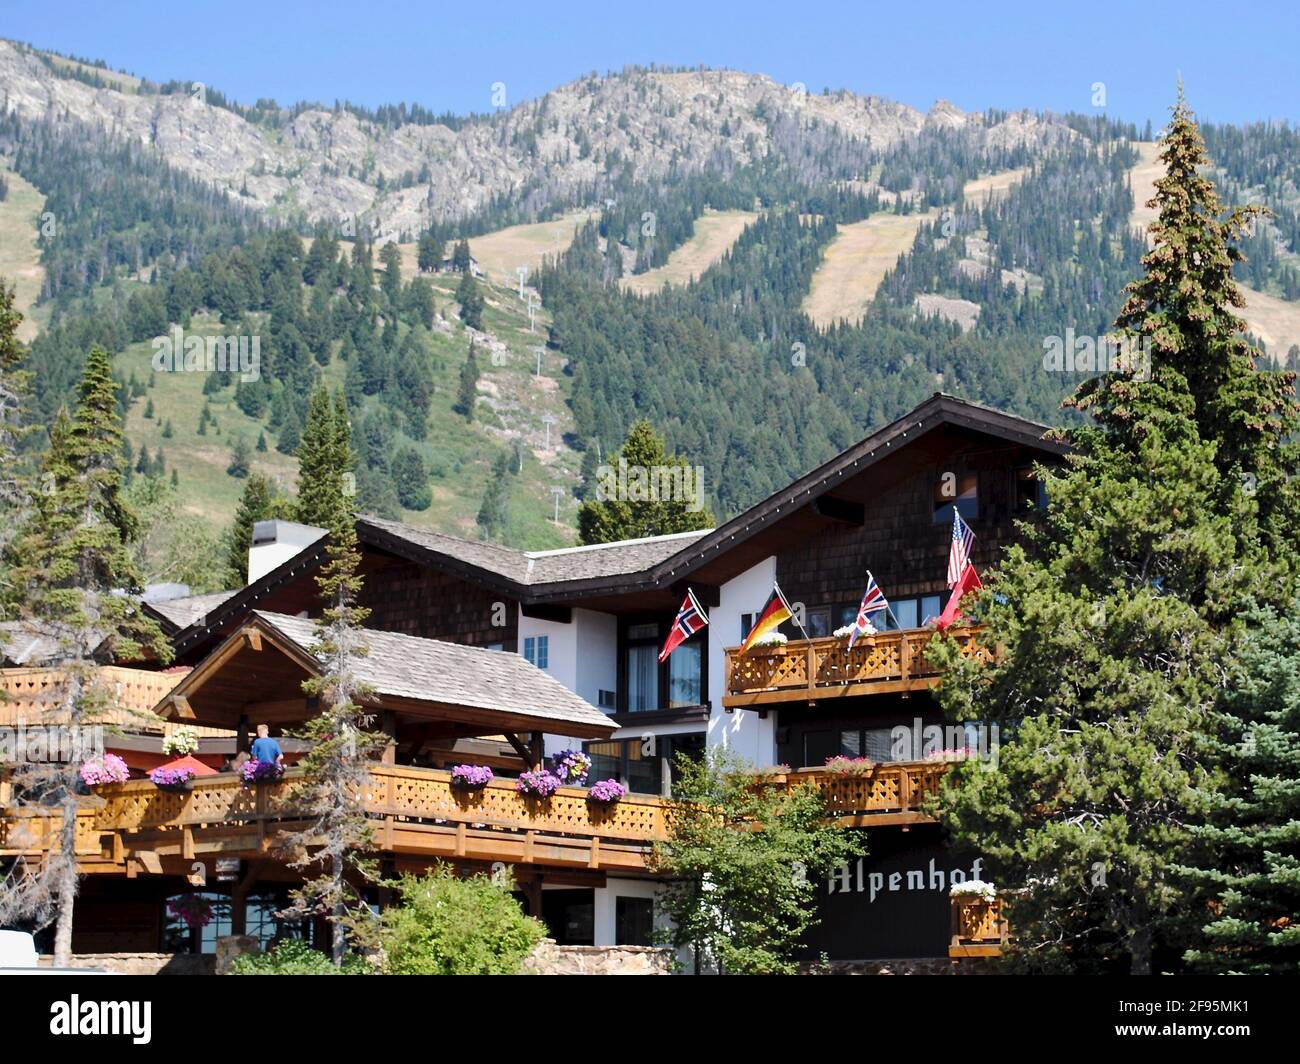 Jackson Hole, Wyoming: The Alpenhof hotel is a European Alpine style ski lodge located at the base of the Jackson Hole Mountain Resort. Stock Photo